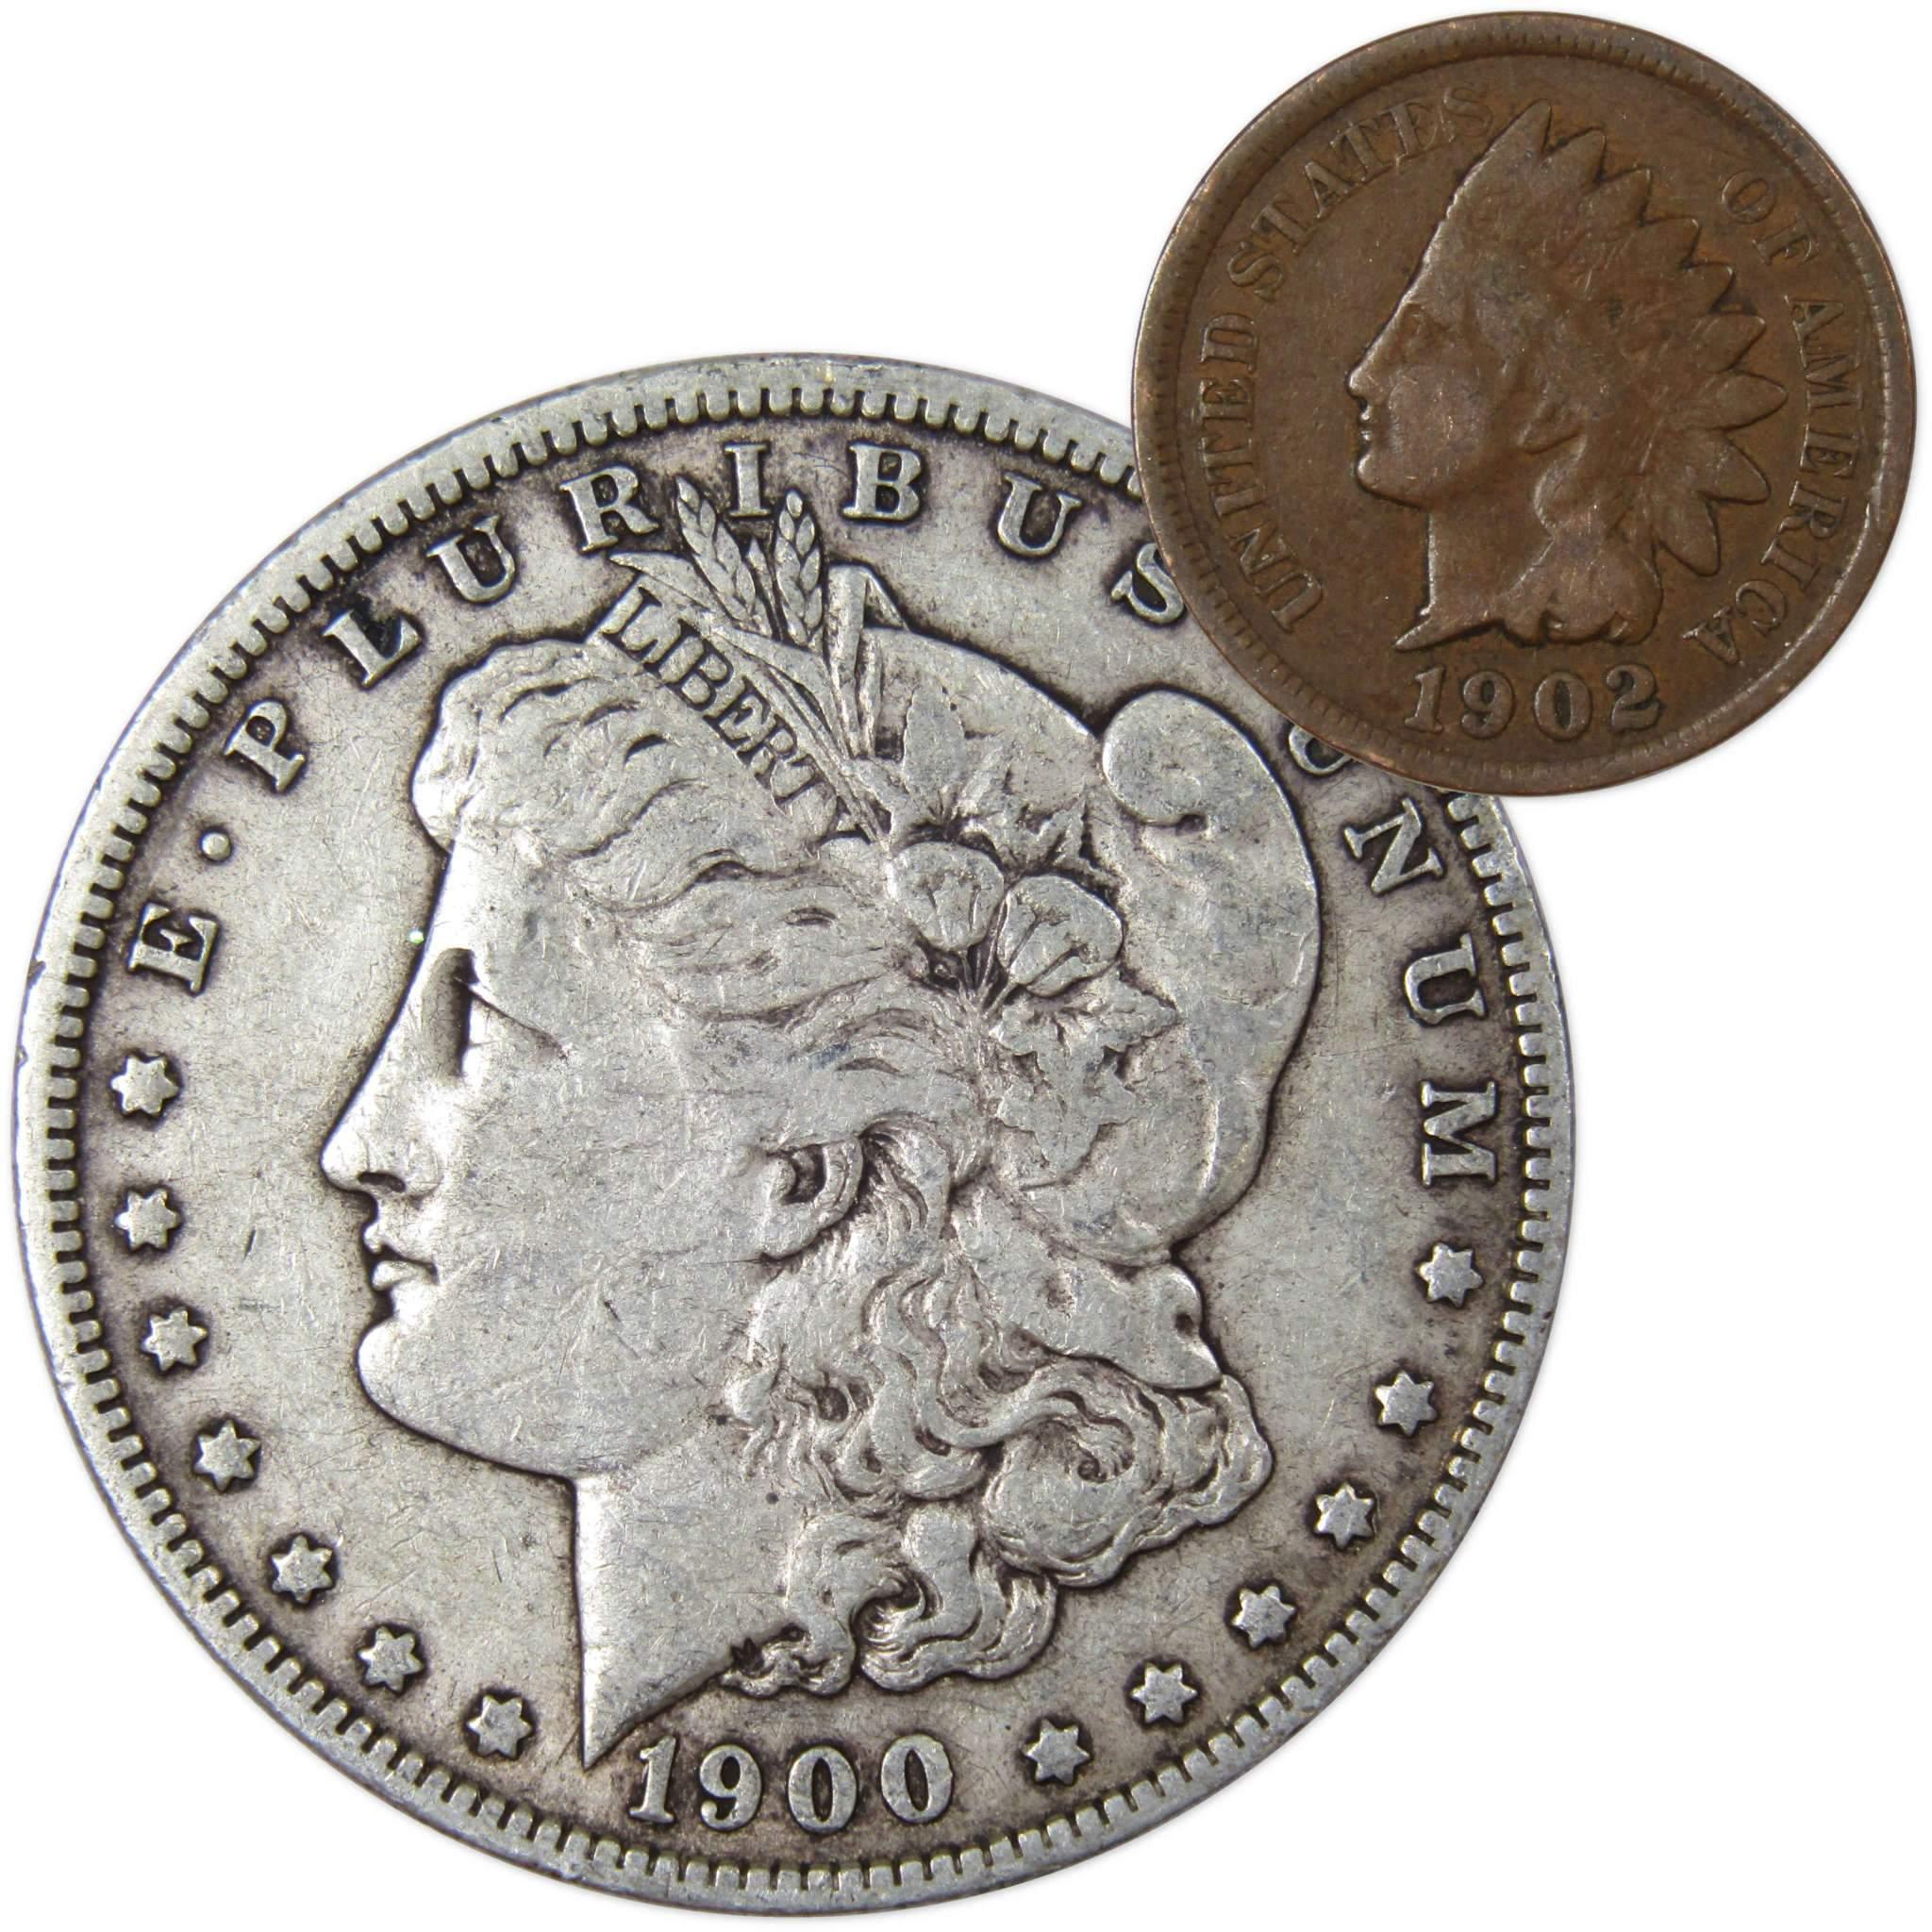 1900 O Morgan Dollar F Fine 90% Silver Coin with 1902 Indian Head Cent G Good - Morgan coin - Morgan silver dollar - Morgan silver dollar for sale - Profile Coins &amp; Collectibles